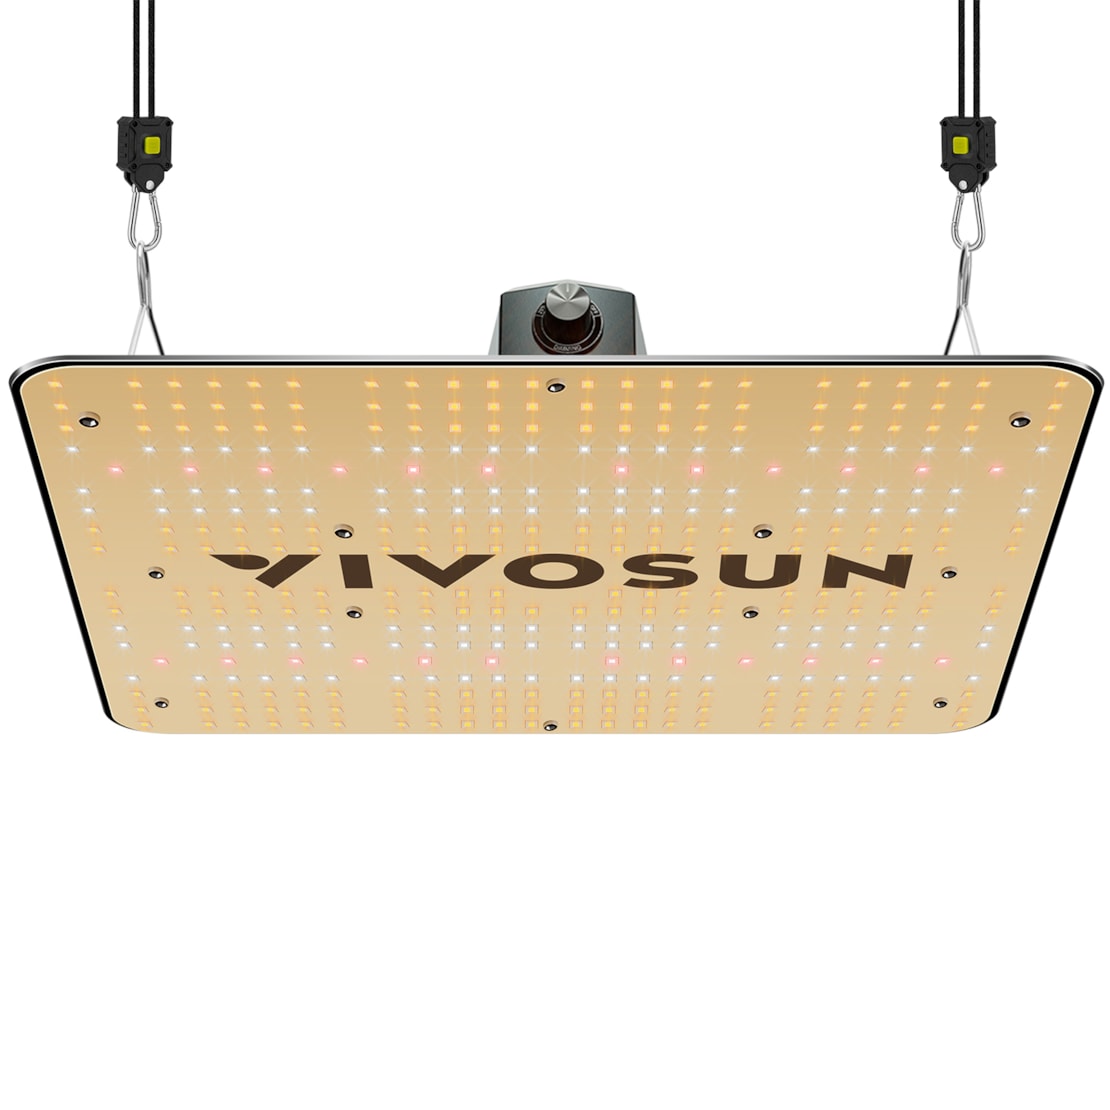 VIVOSUN VS1500 LED Grow Light with Samsung LM301 Diodes